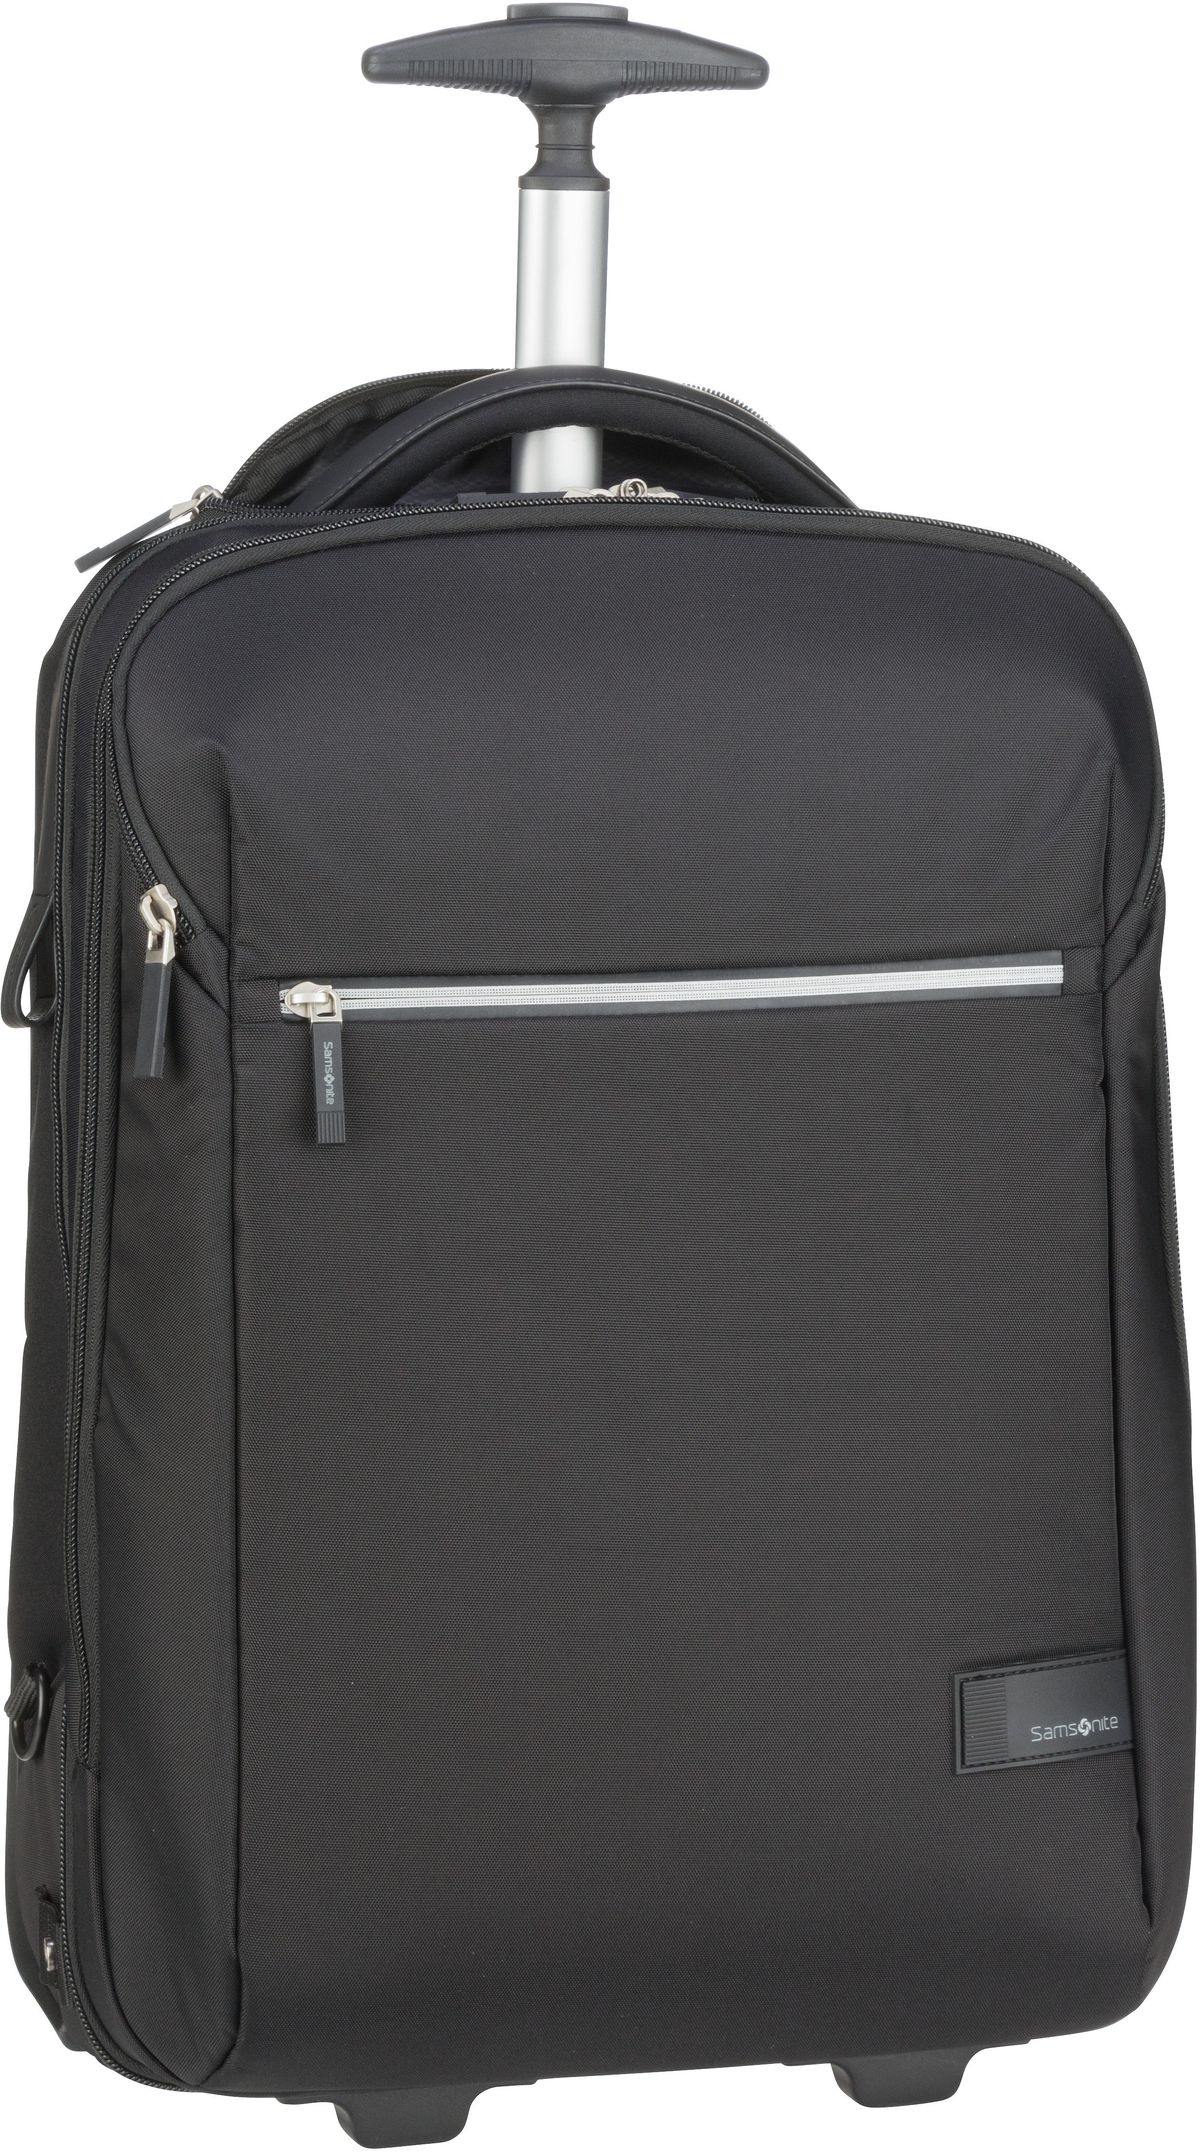 Samsonite Litepoint Laptop Backpack Wh Black 17.3